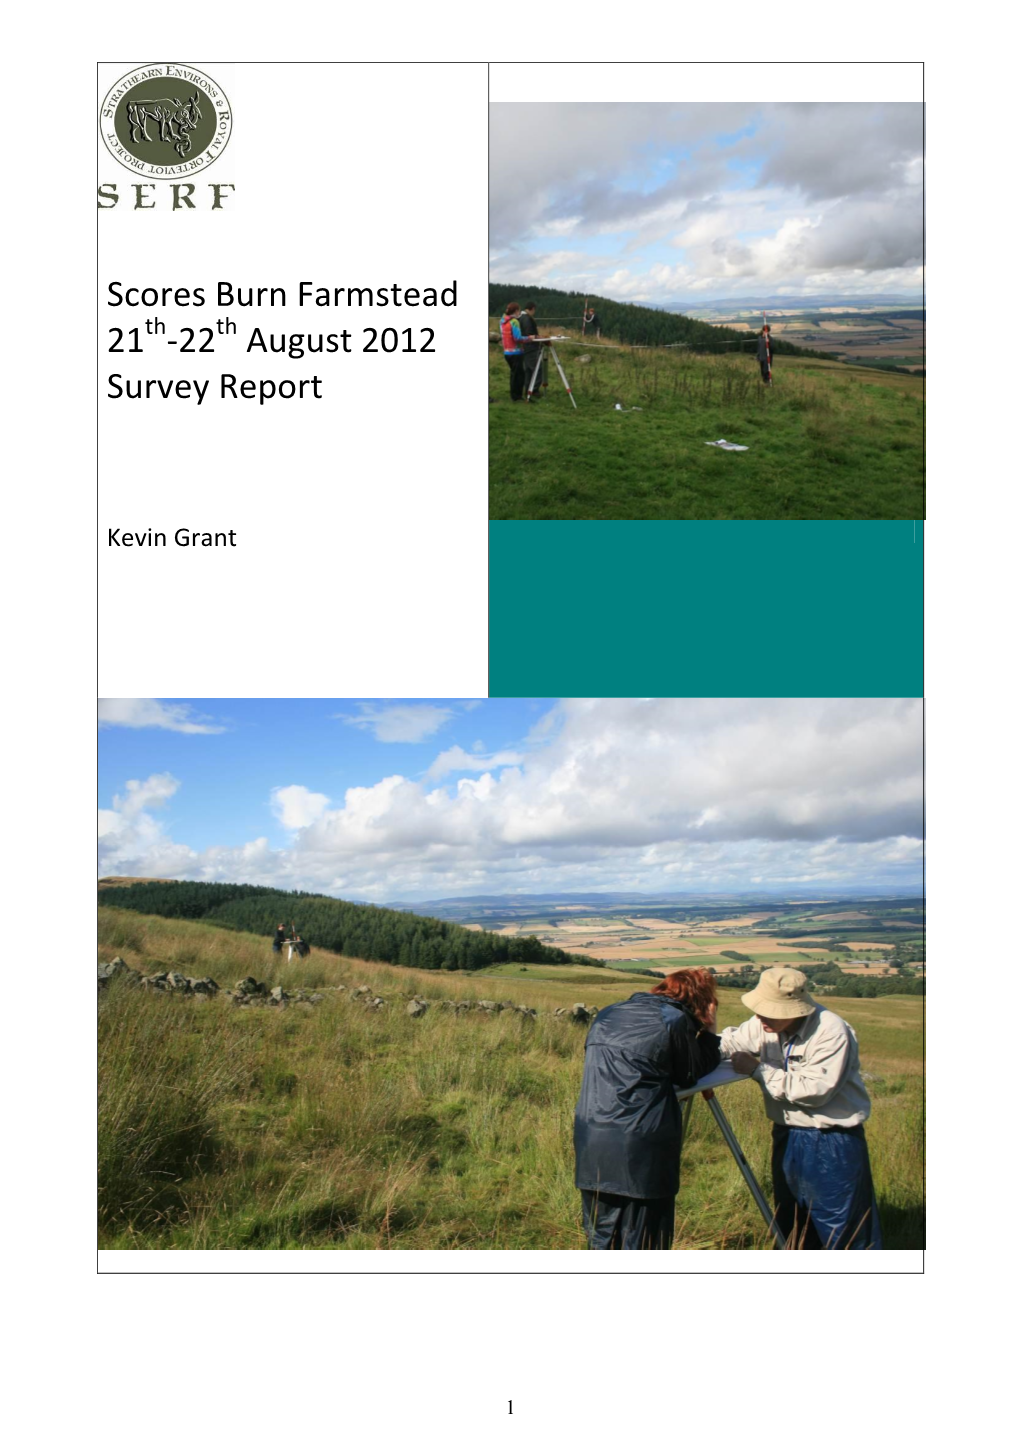 Scores Burn Farmstead Survey Report 2012